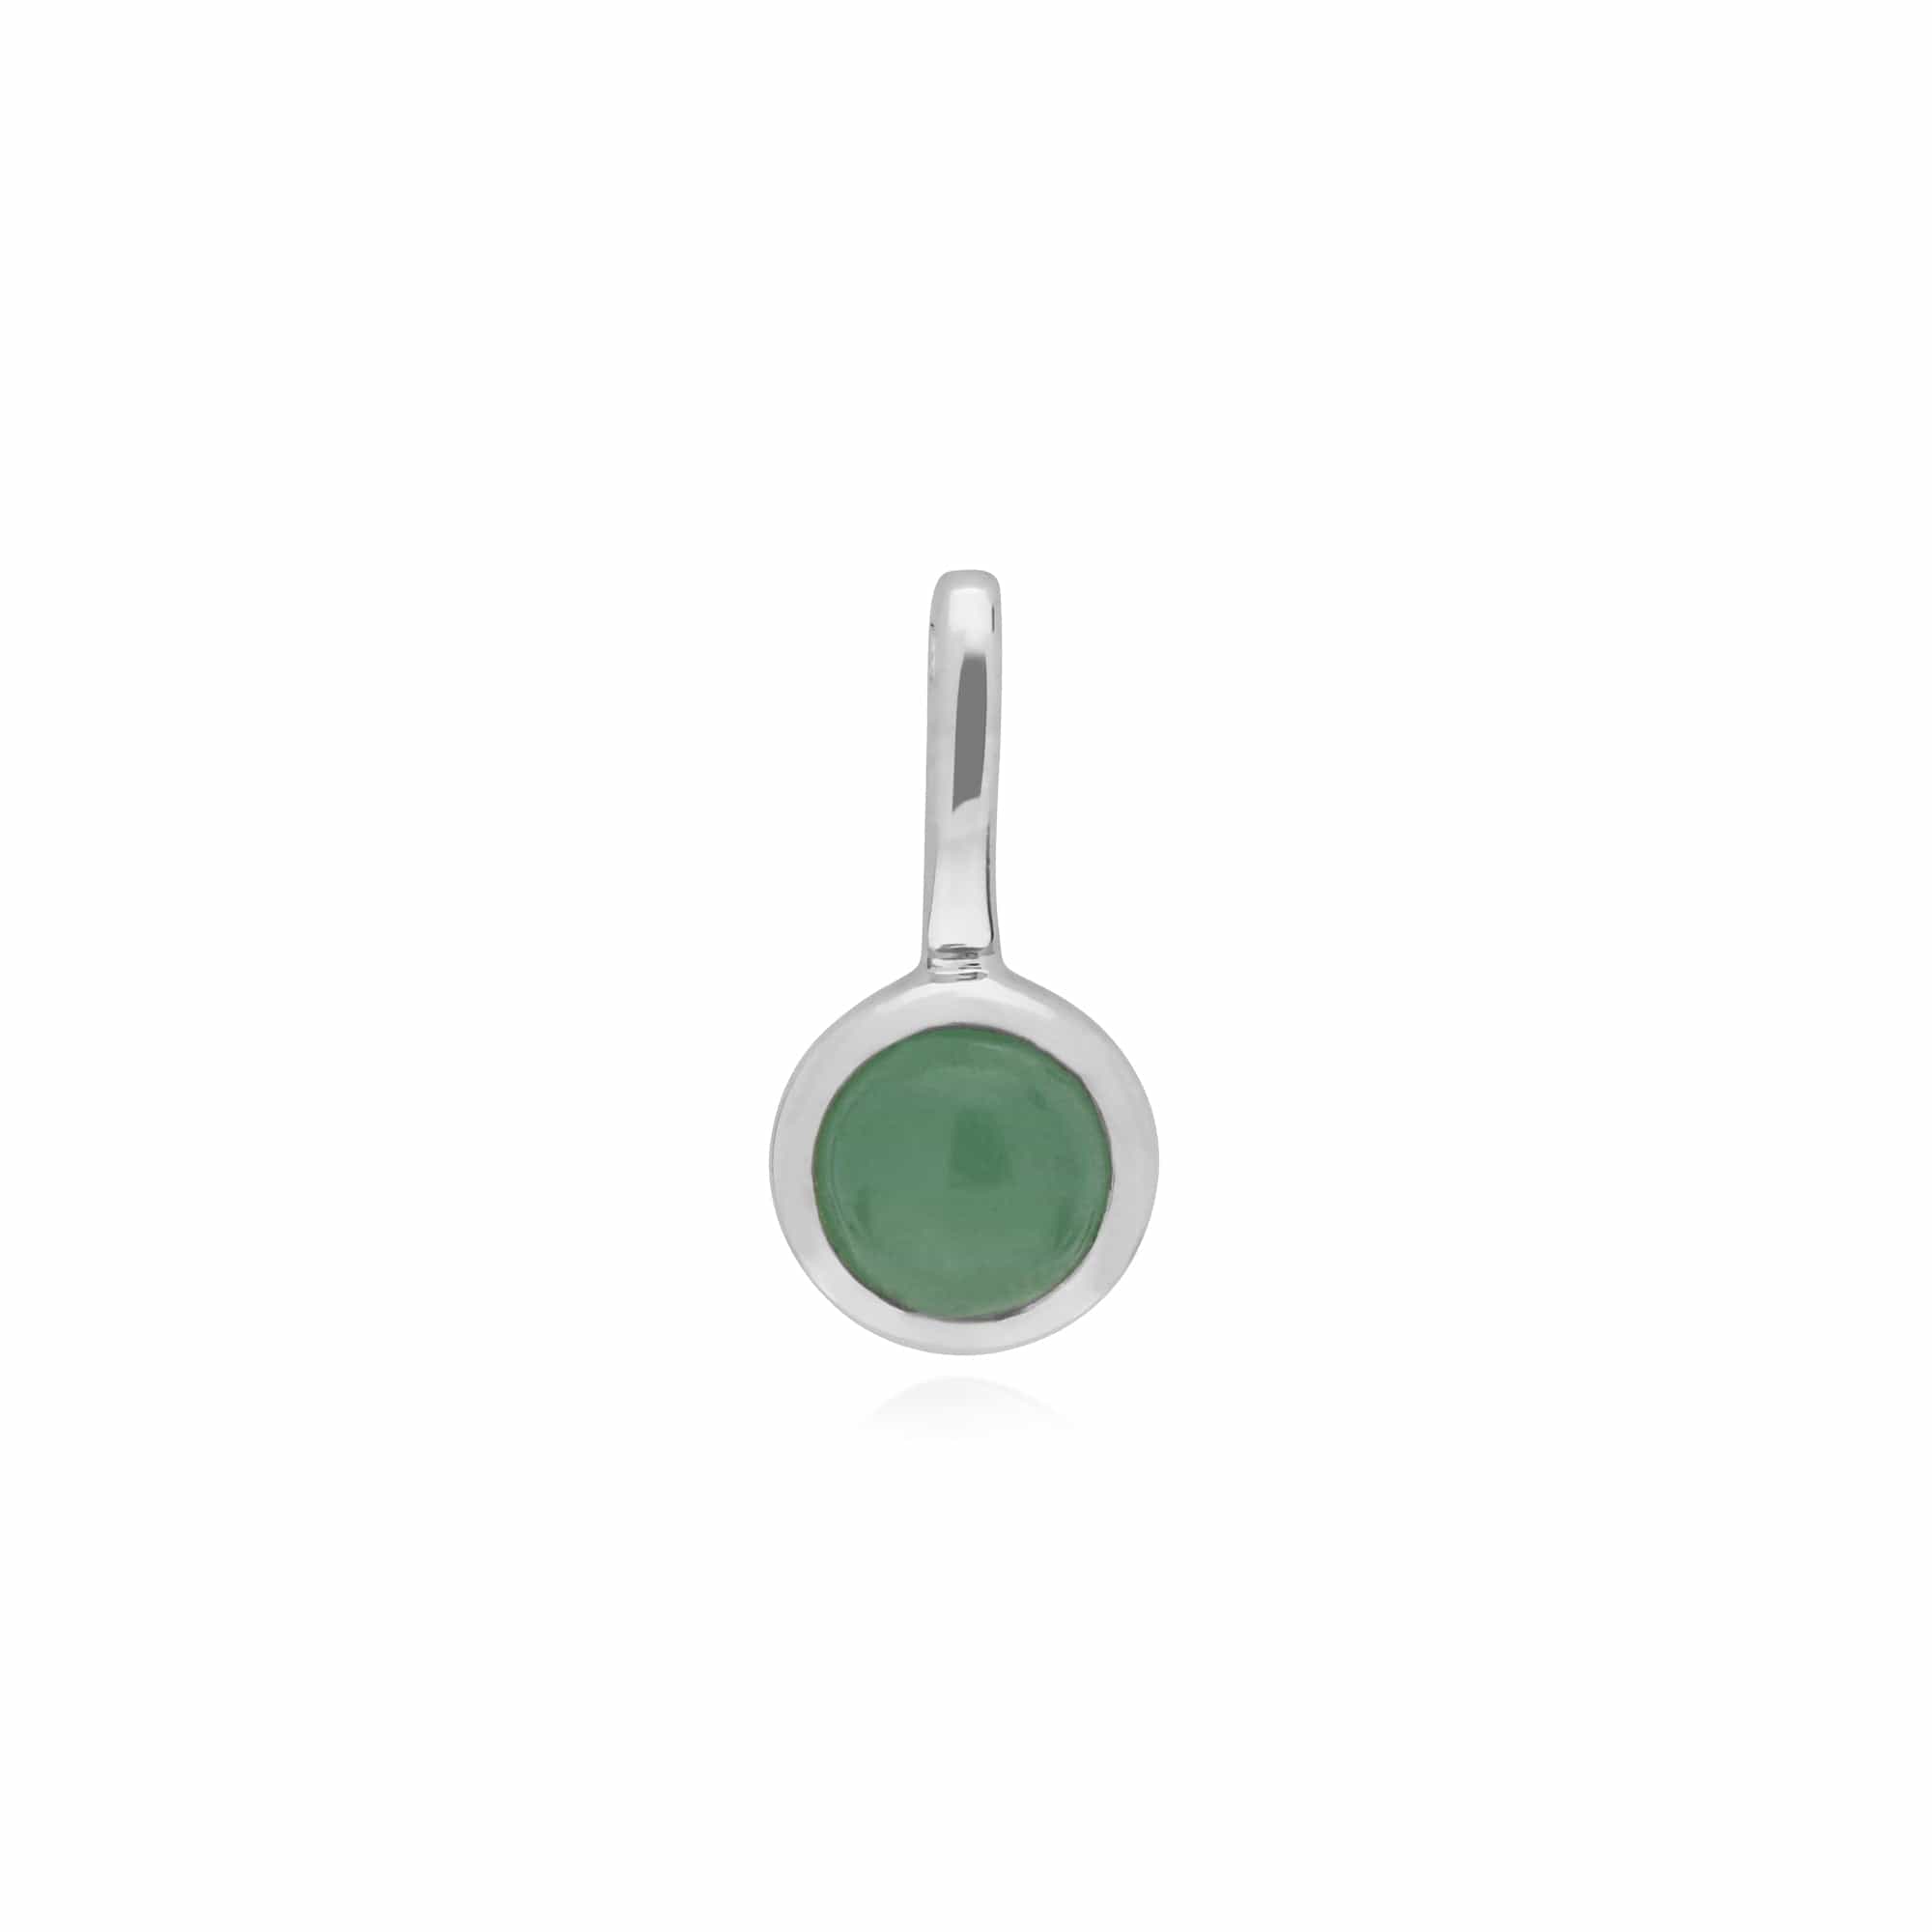 270P028403925-270P026601925 Classic Swirl Heart Lock Pendant & Jade Charm in 925 Sterling Silver 2